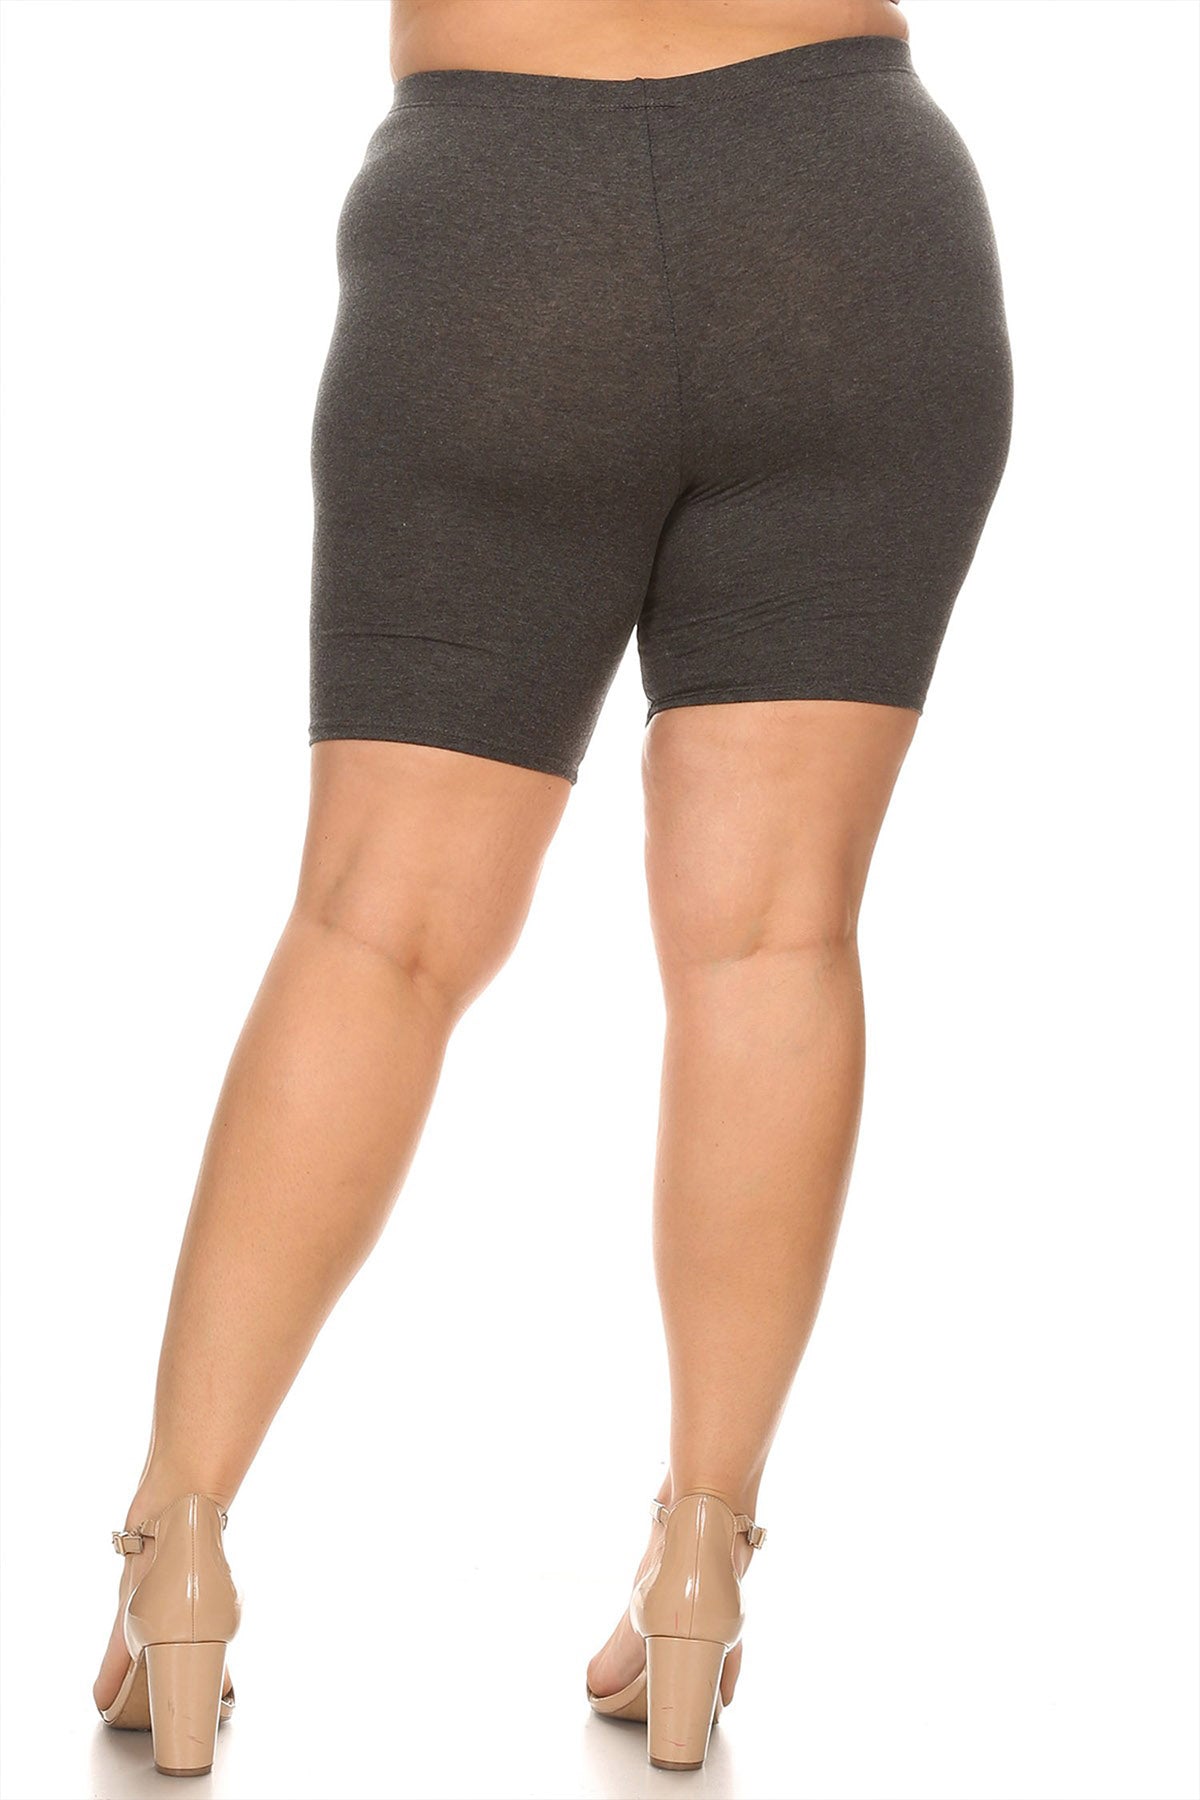 Women's Plus Size High Waist Biker Shorts Pants